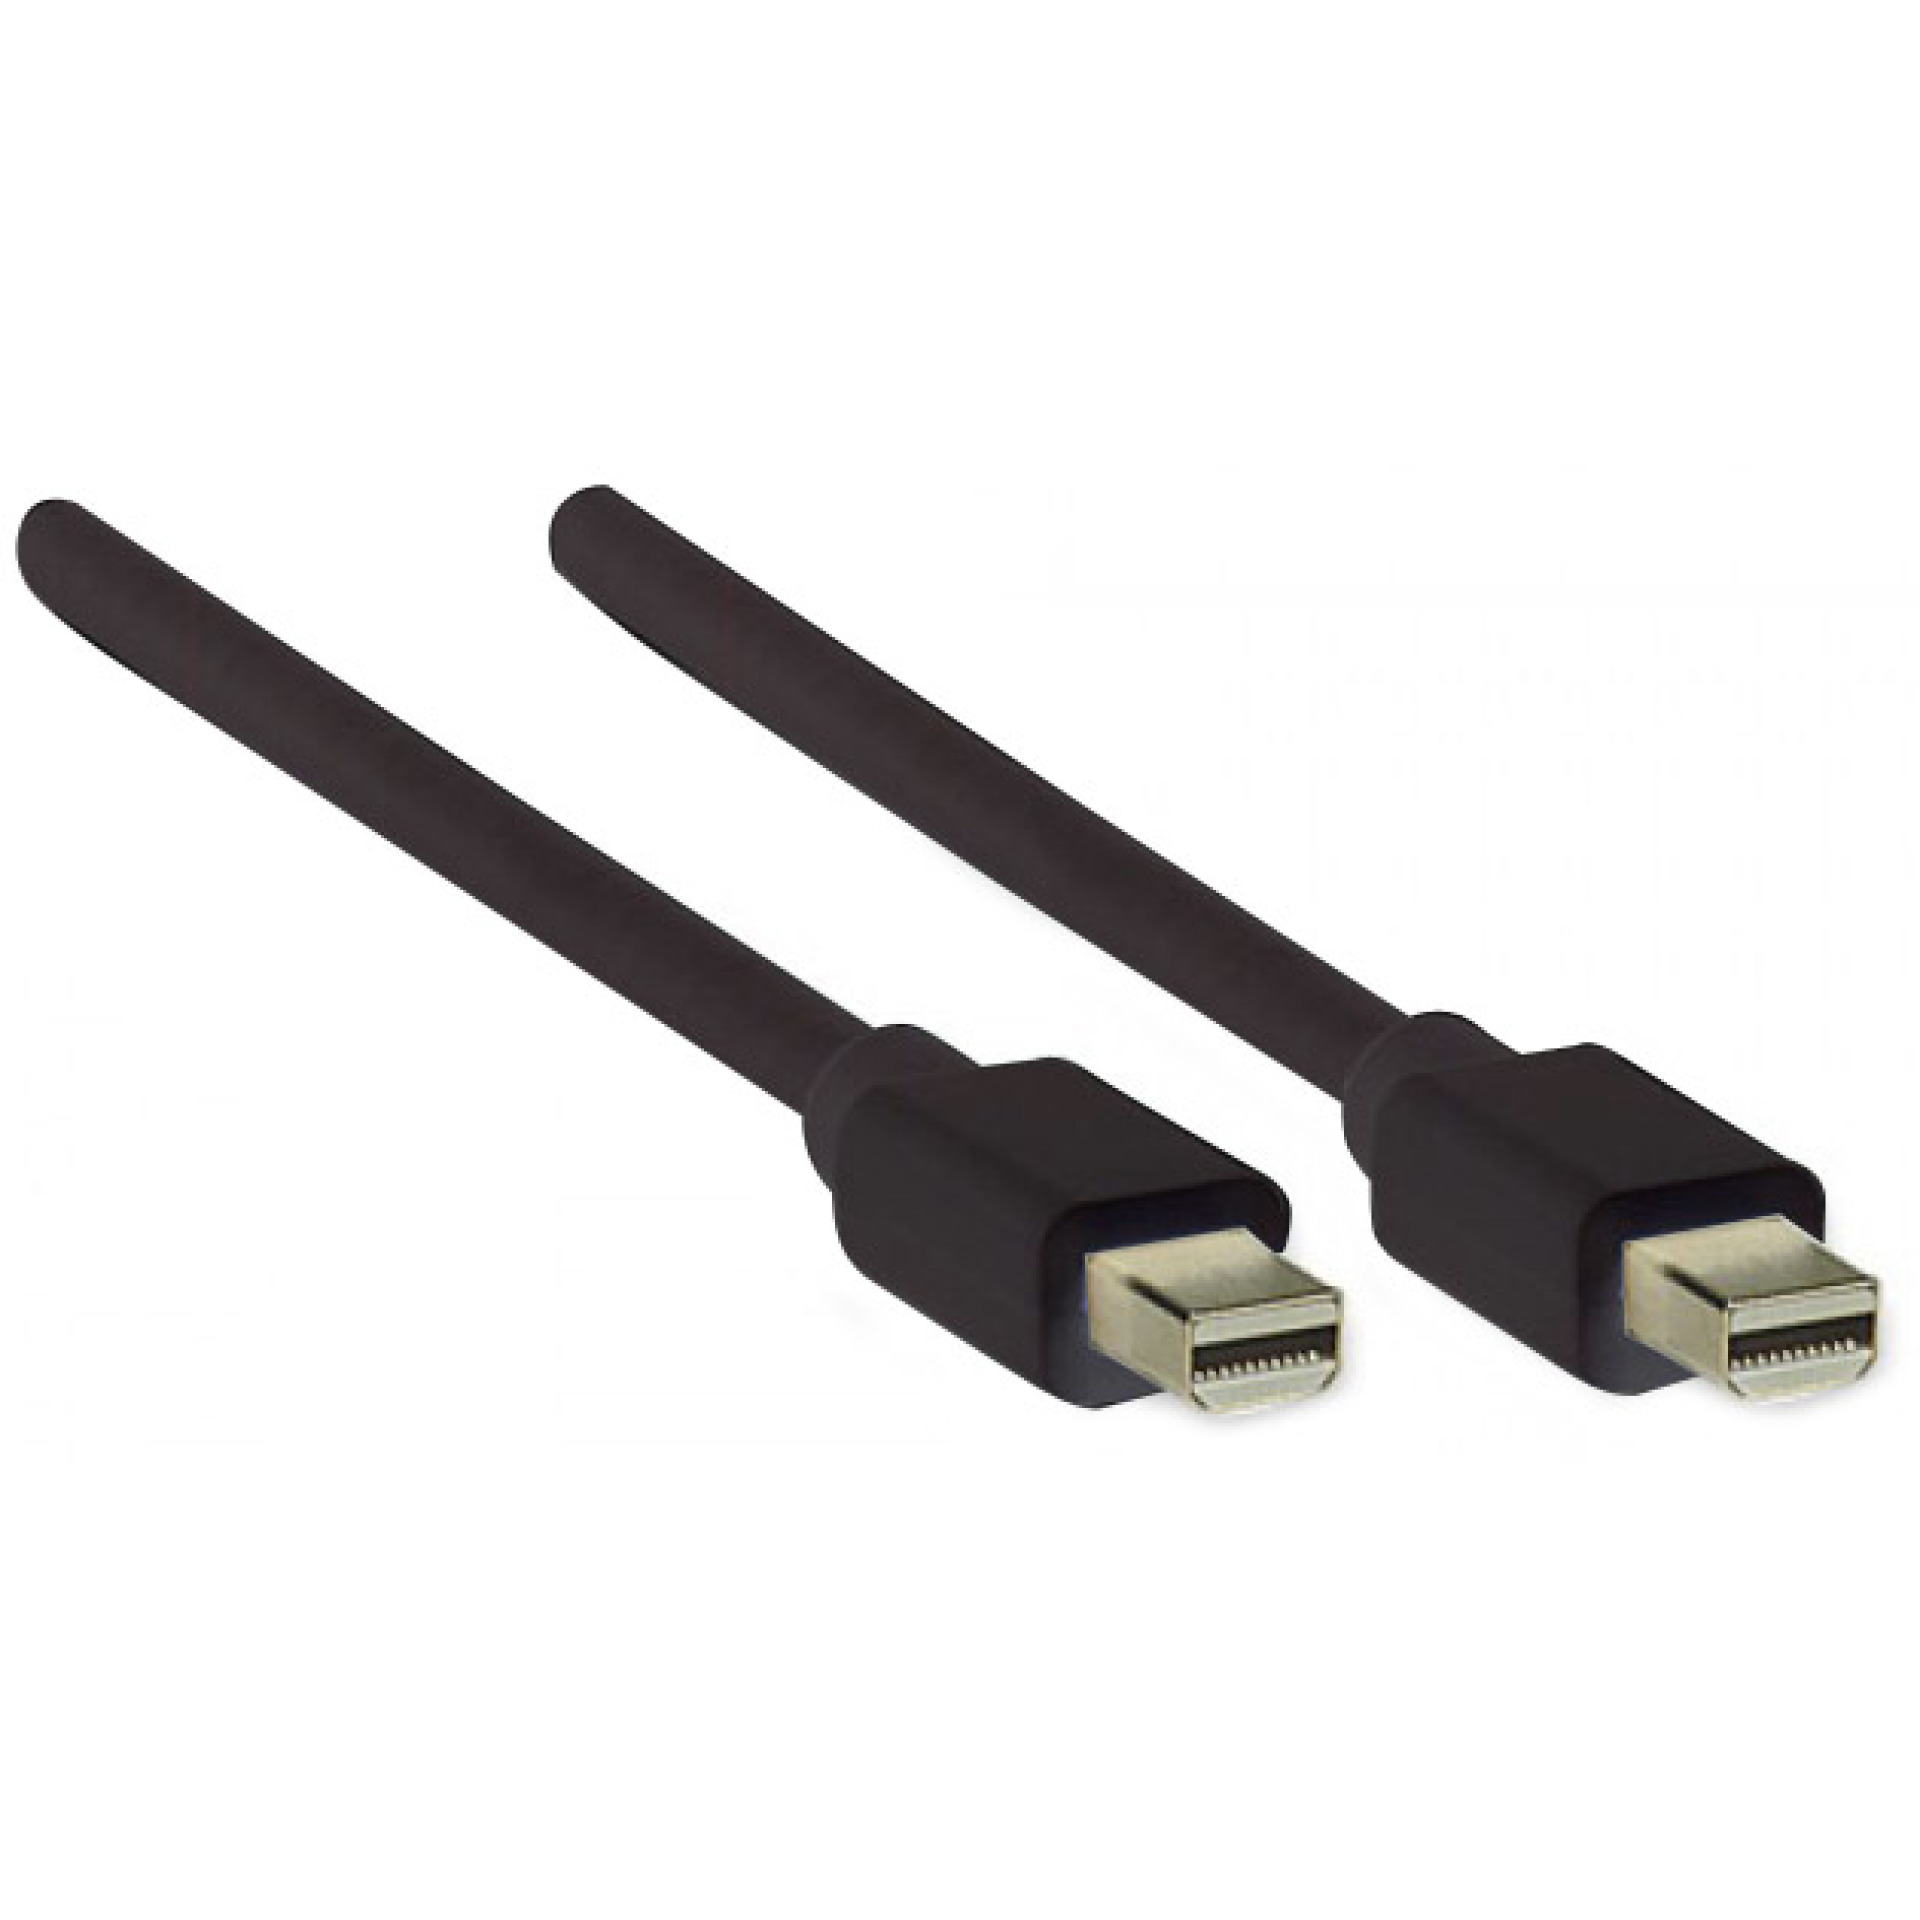 Mini-DisplayPort (Thunderbolt) Connection Cable, M-M, 2m